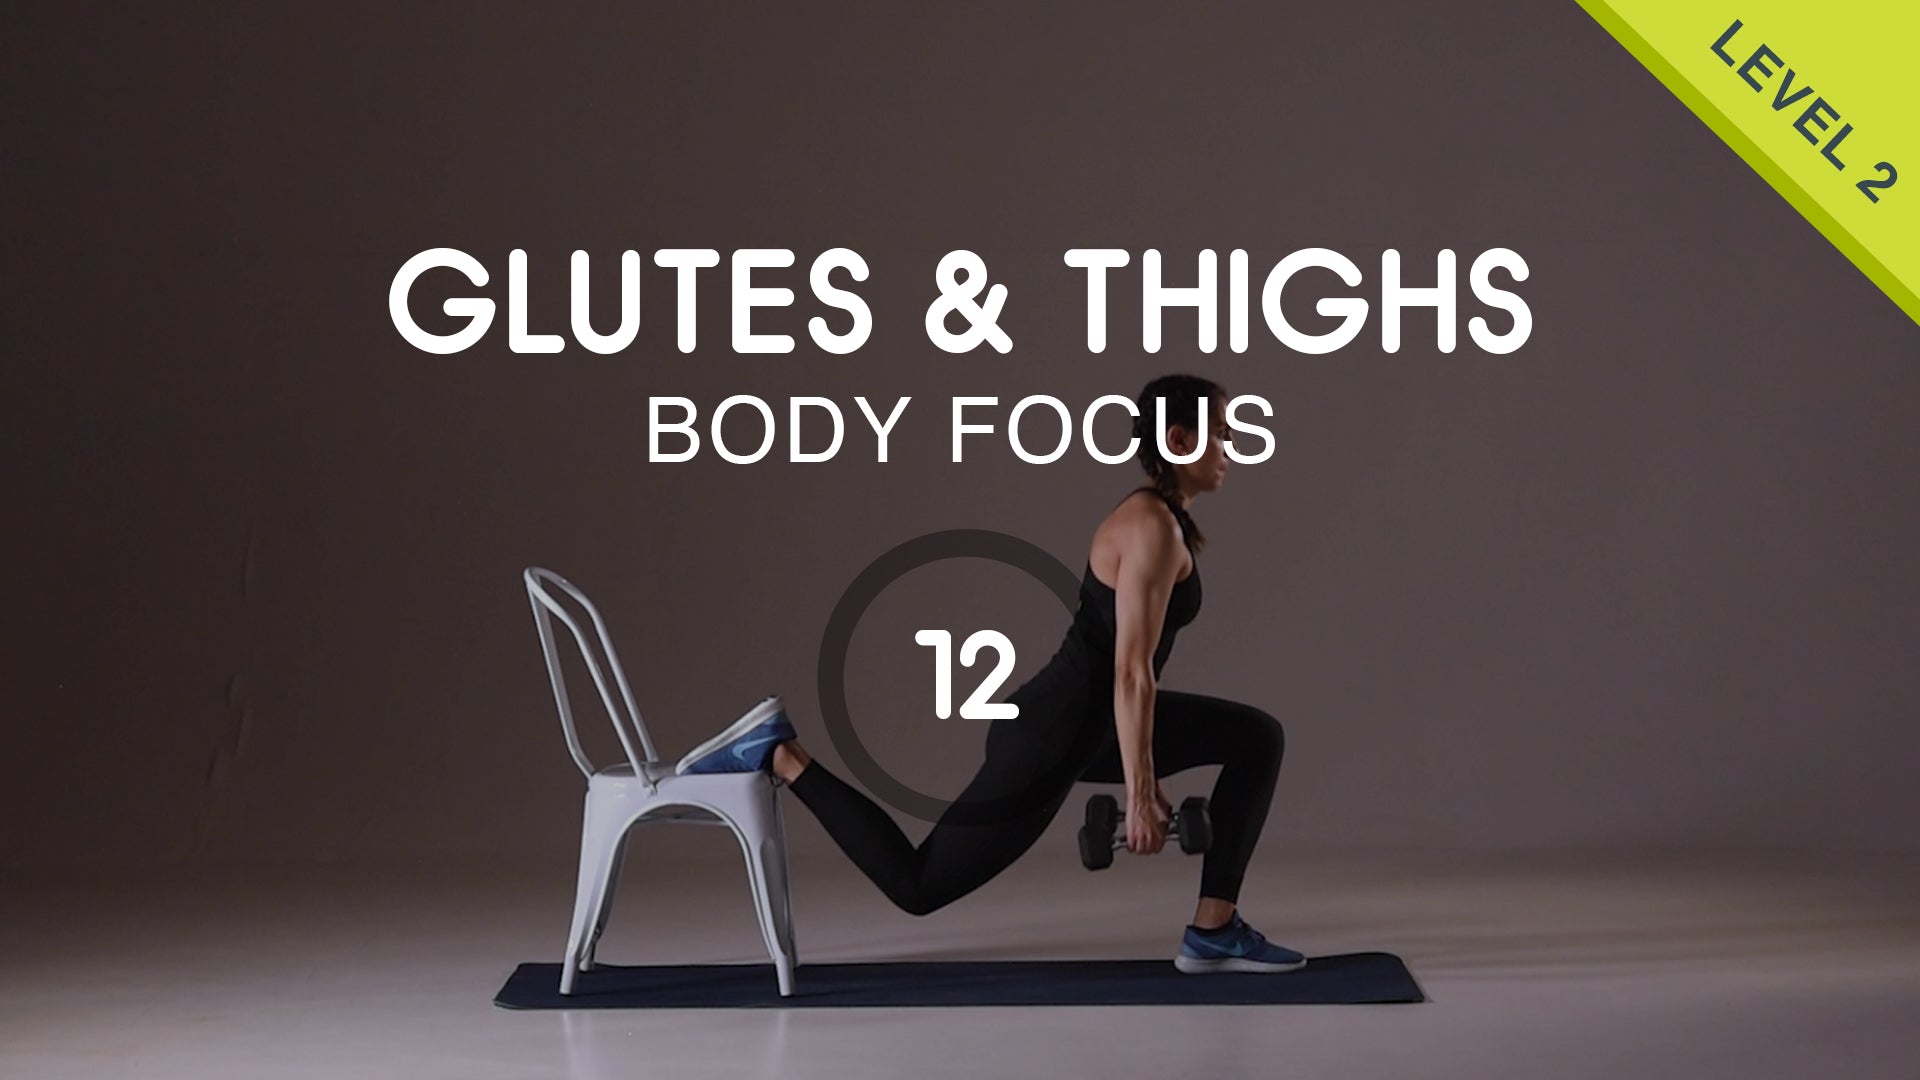 Slim Legs Workout (7 Minutes) 